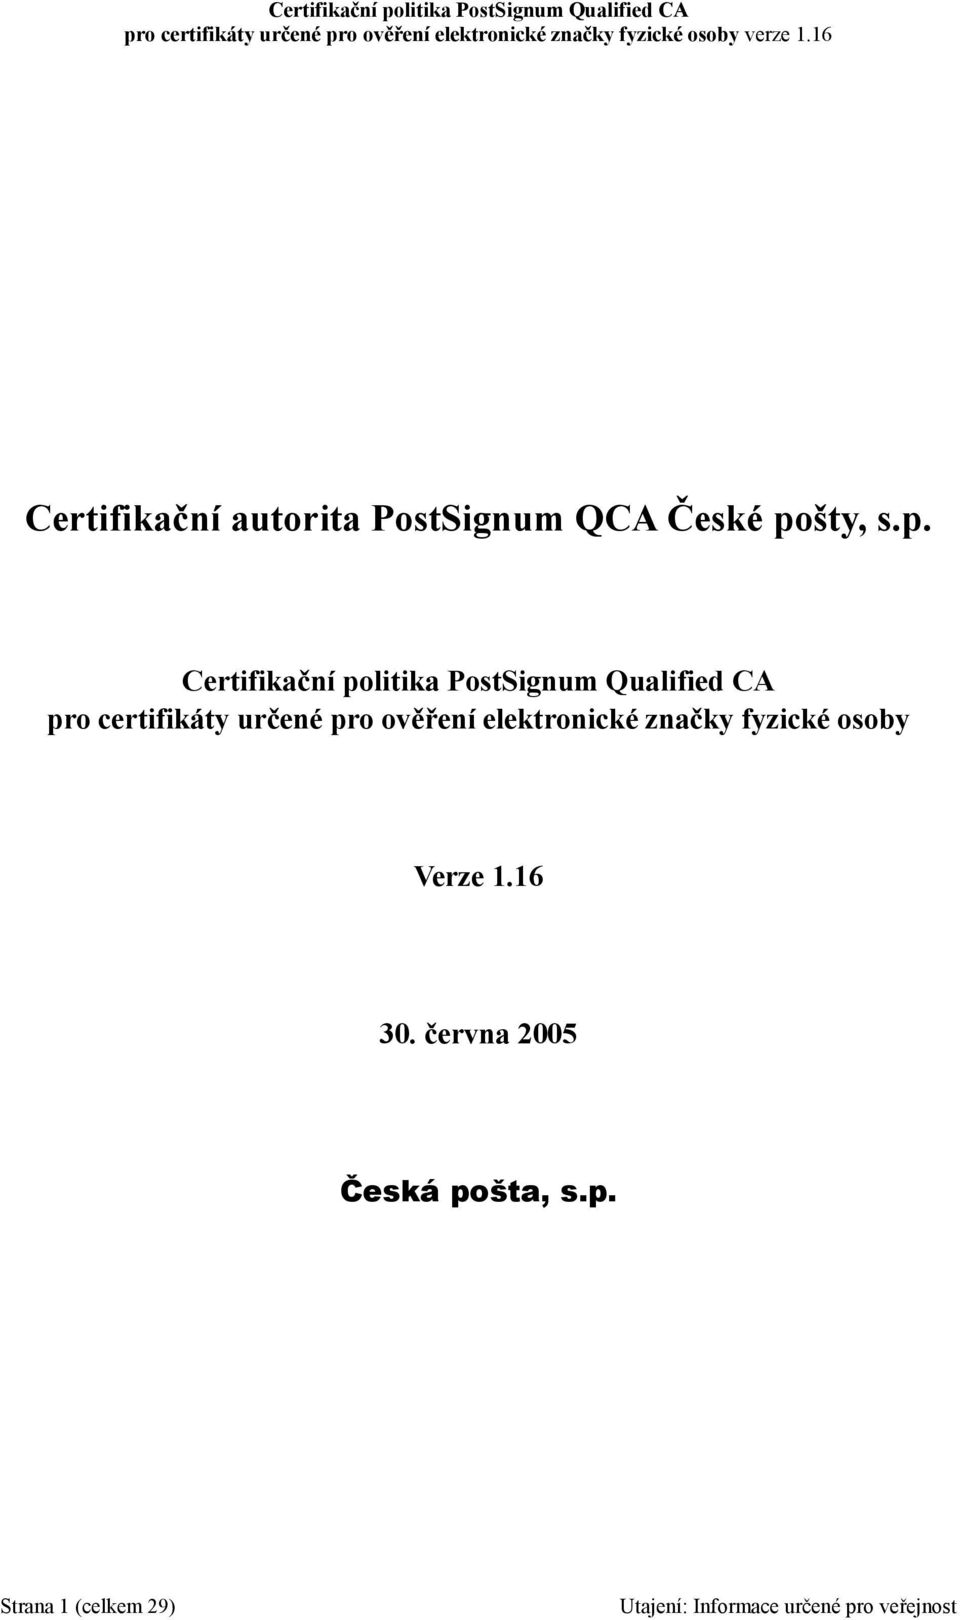 Certifikační politika PostSignum Qualified CA pro